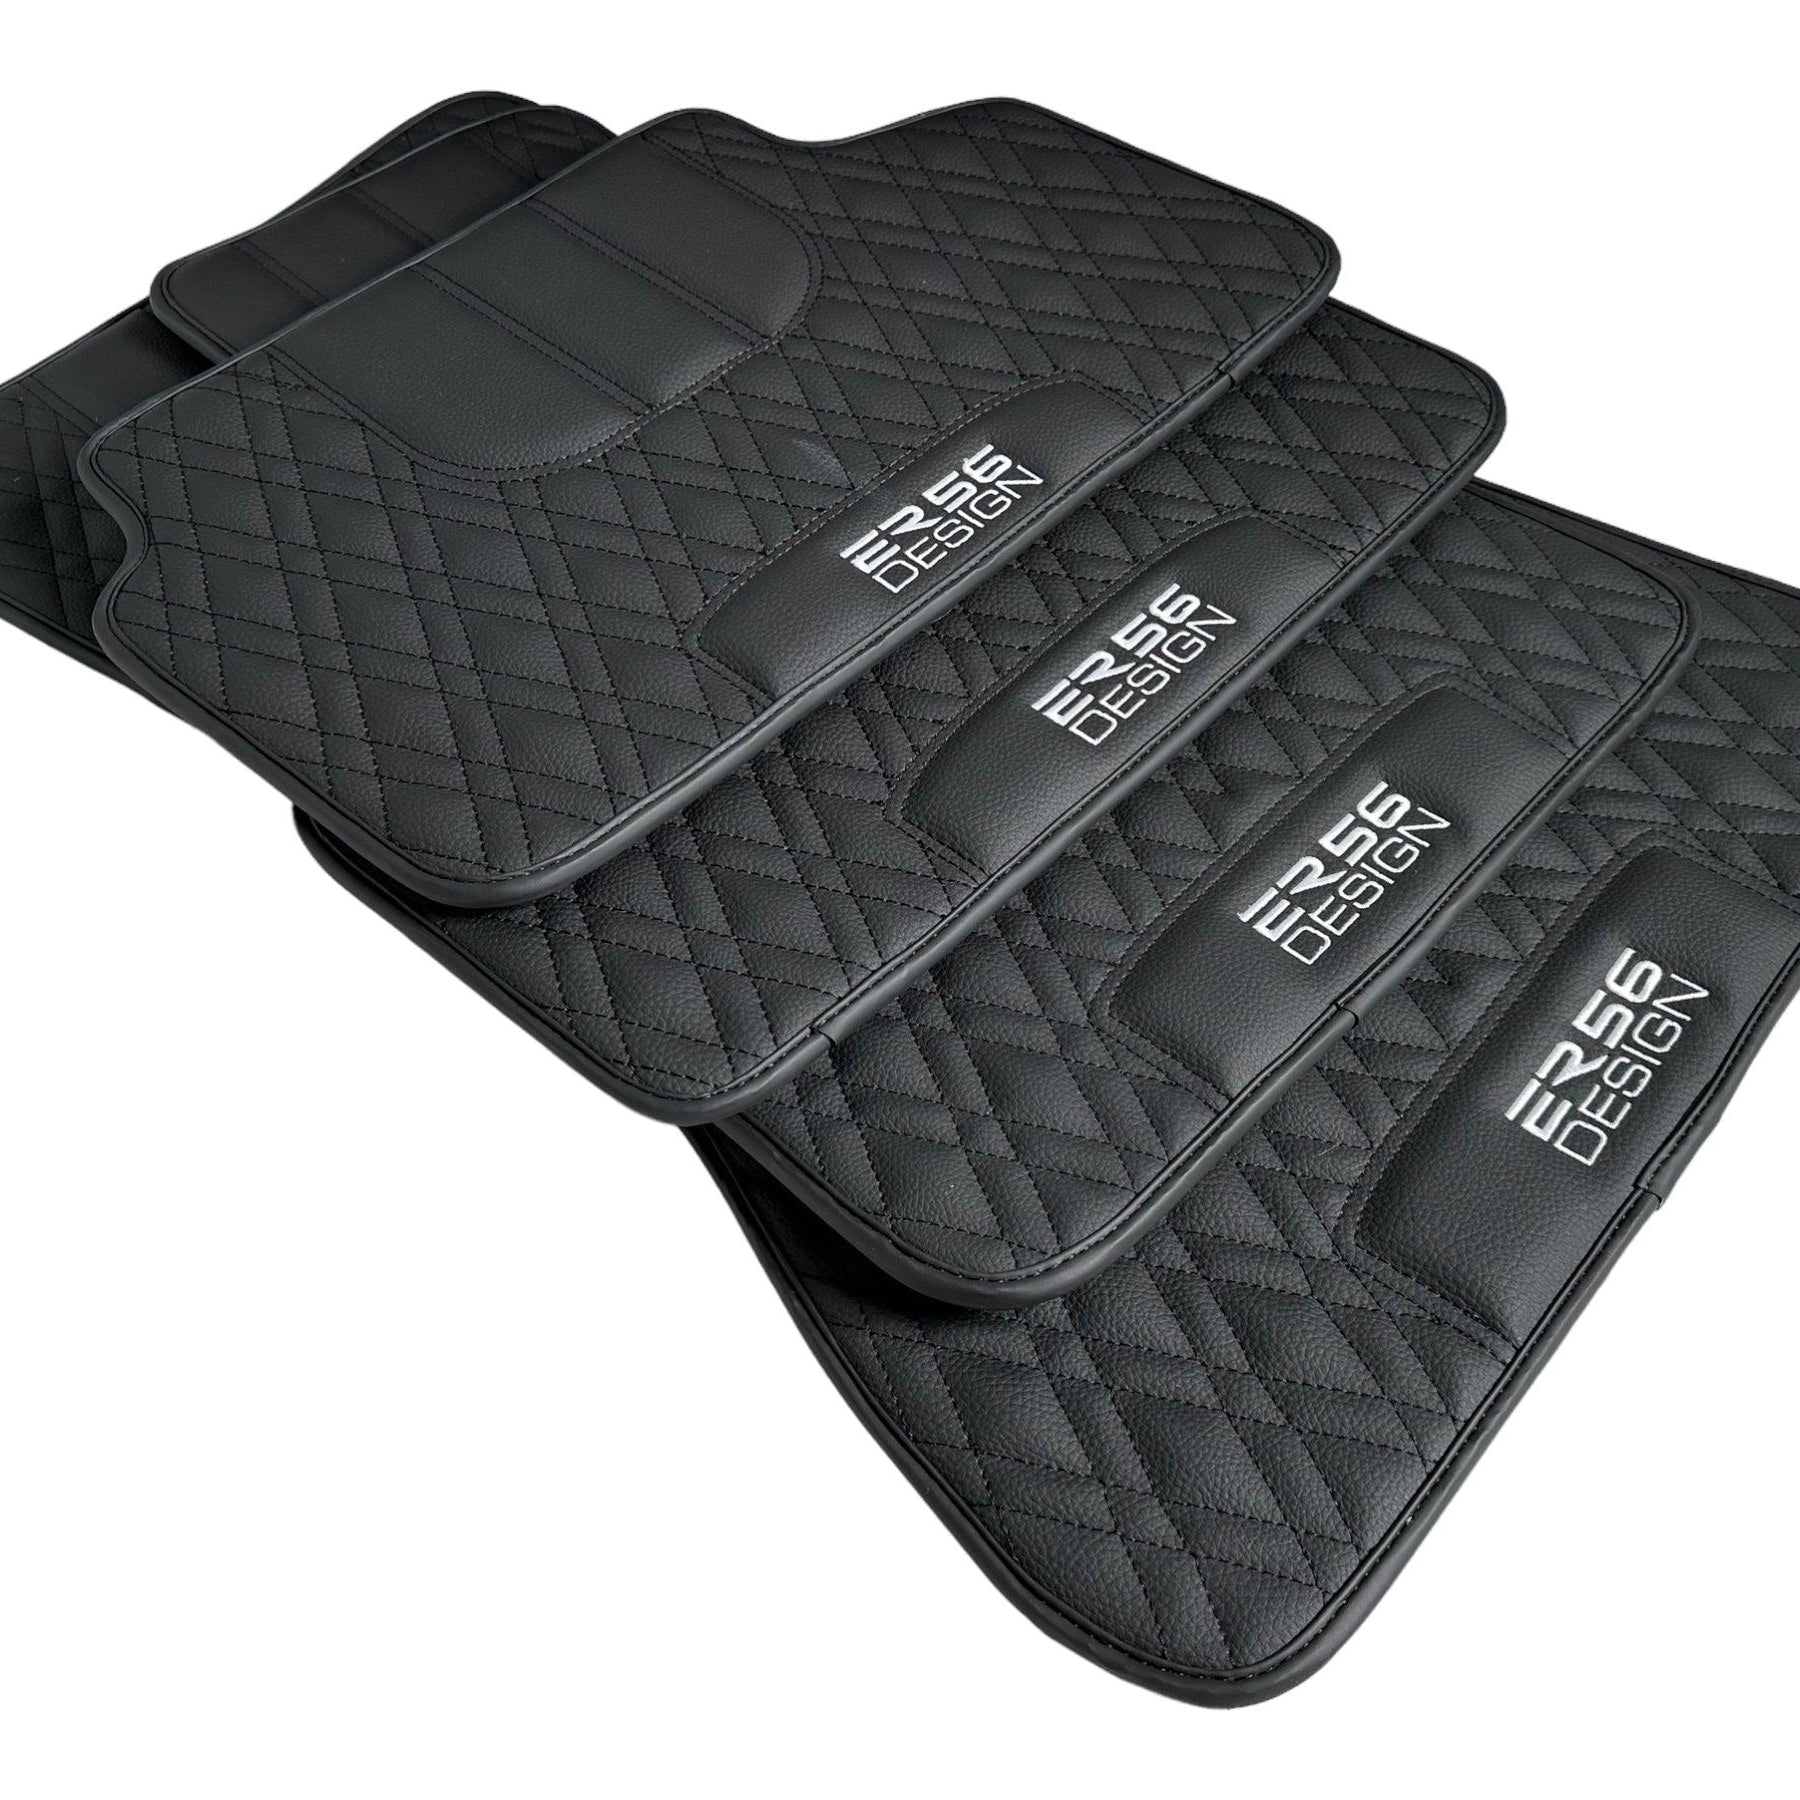 Floor Mats For BMW 3 Series F31 5-doors Wagon Black Leather Er56 Design - AutoWin